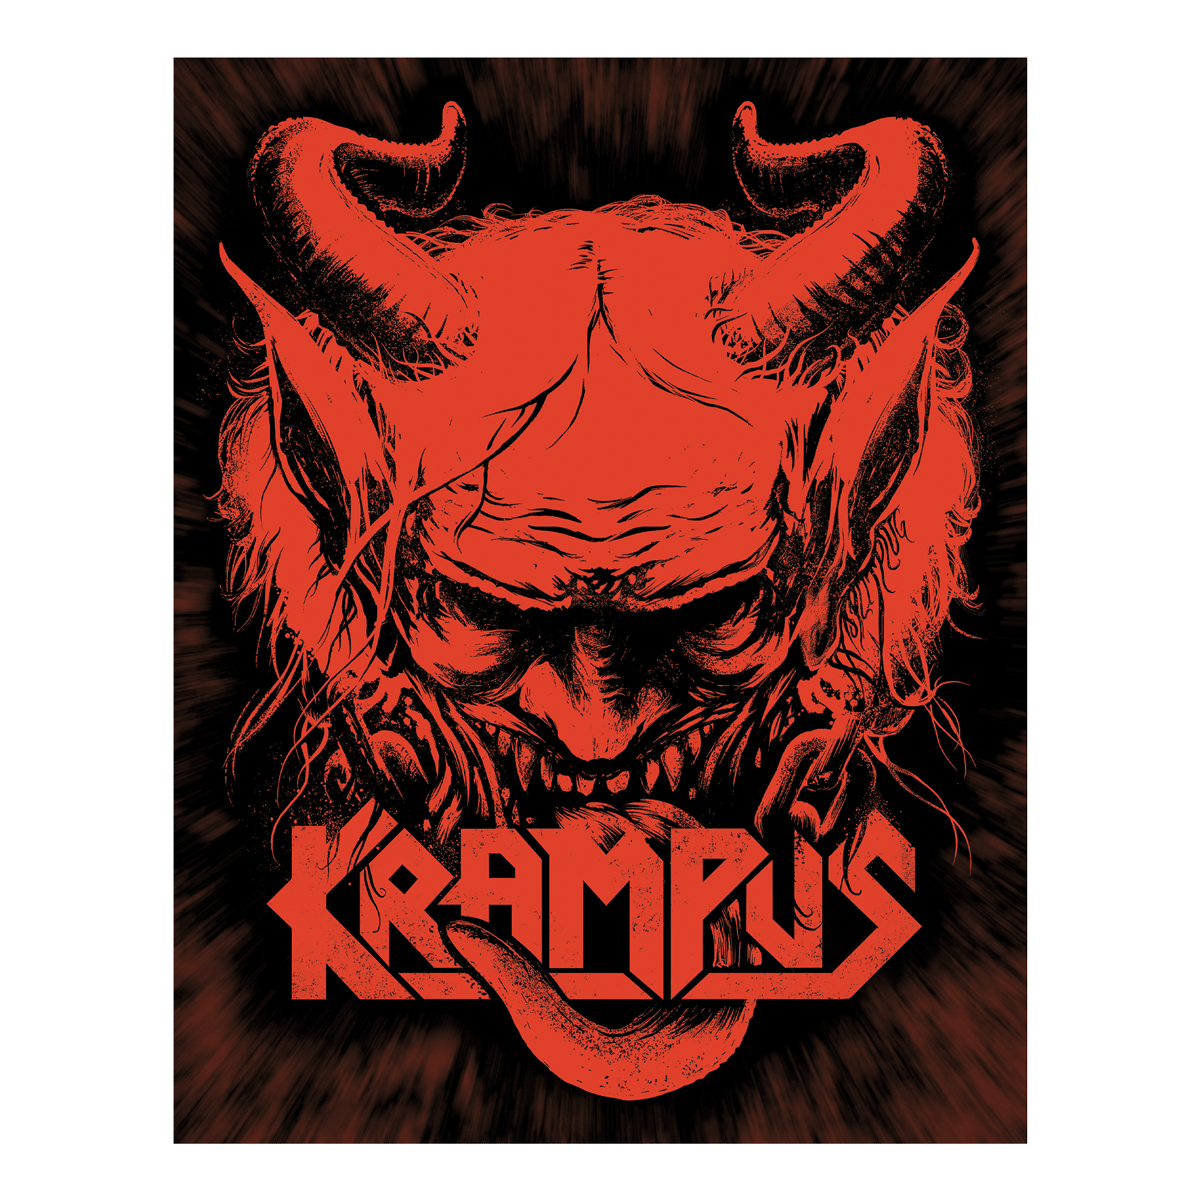 Krampus 11"x14" Print